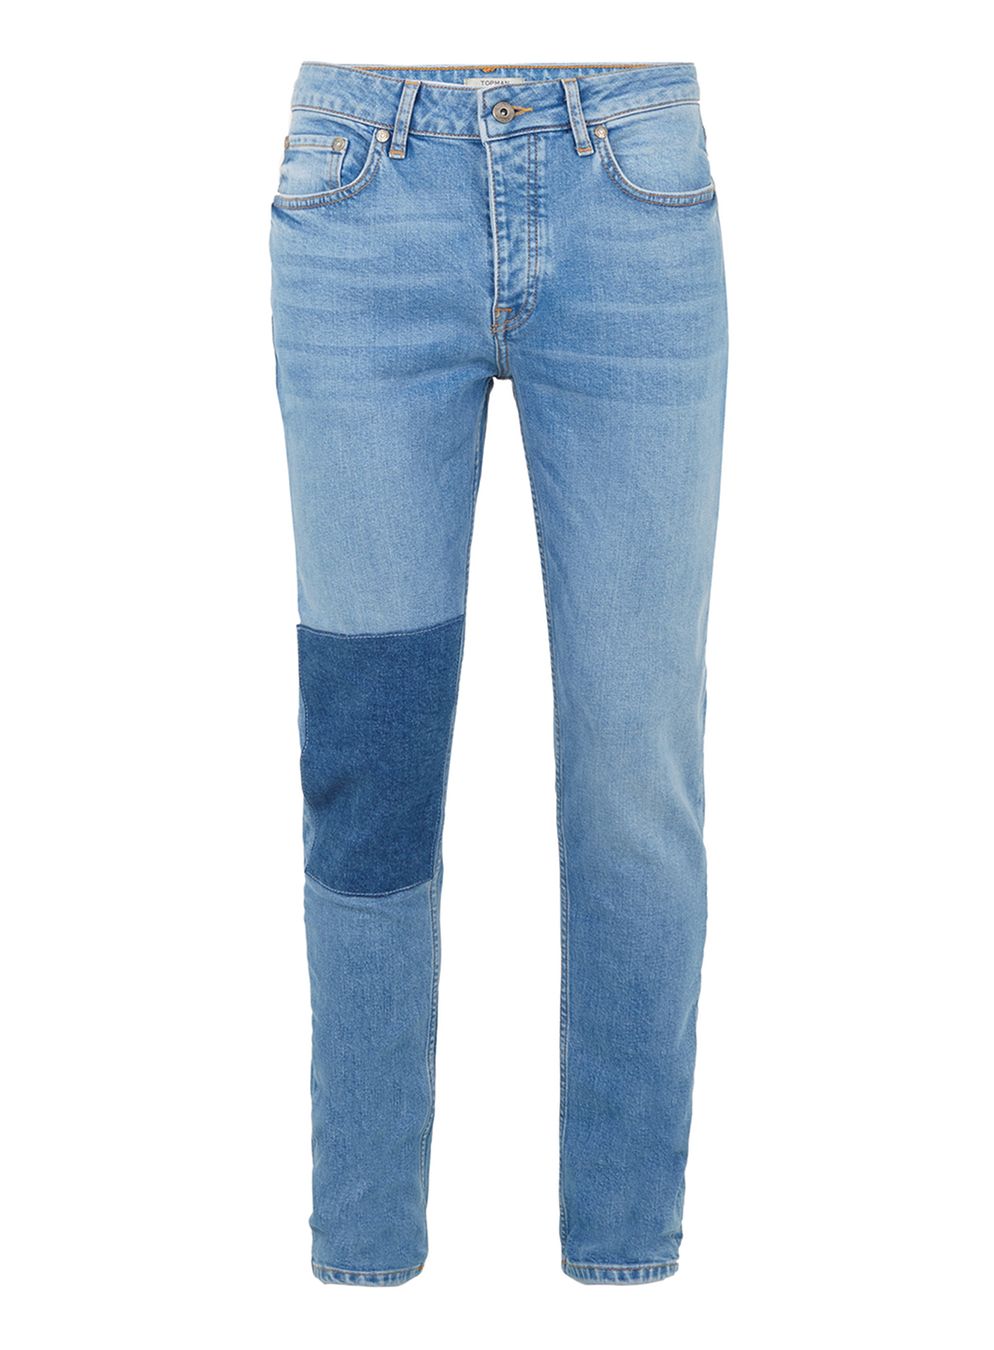 Mid Blue Patch Stretch Skinny Jeans £20 